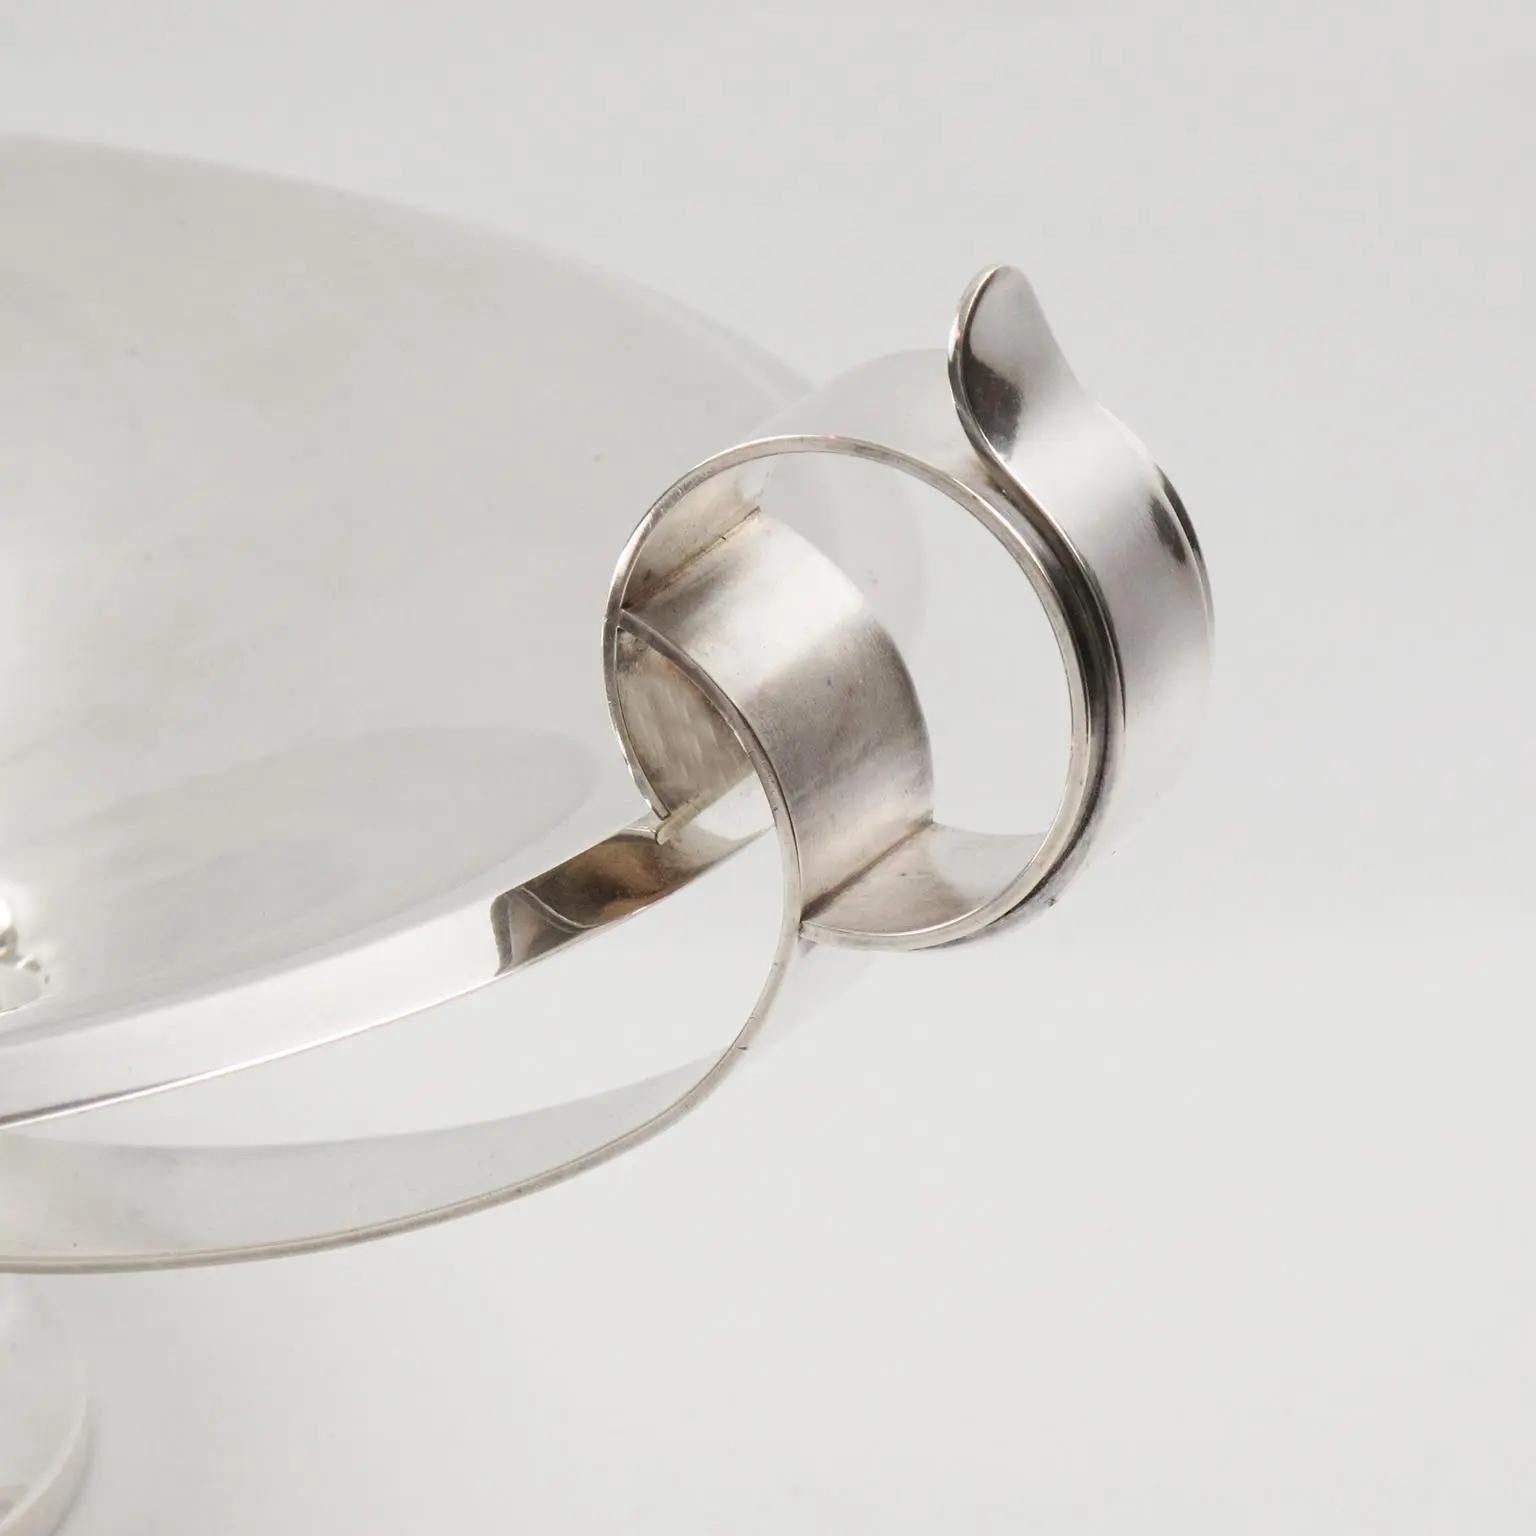 Metal Art Deco Silver Plate Decorative Bowl Centerpiece, France 1930s For Sale